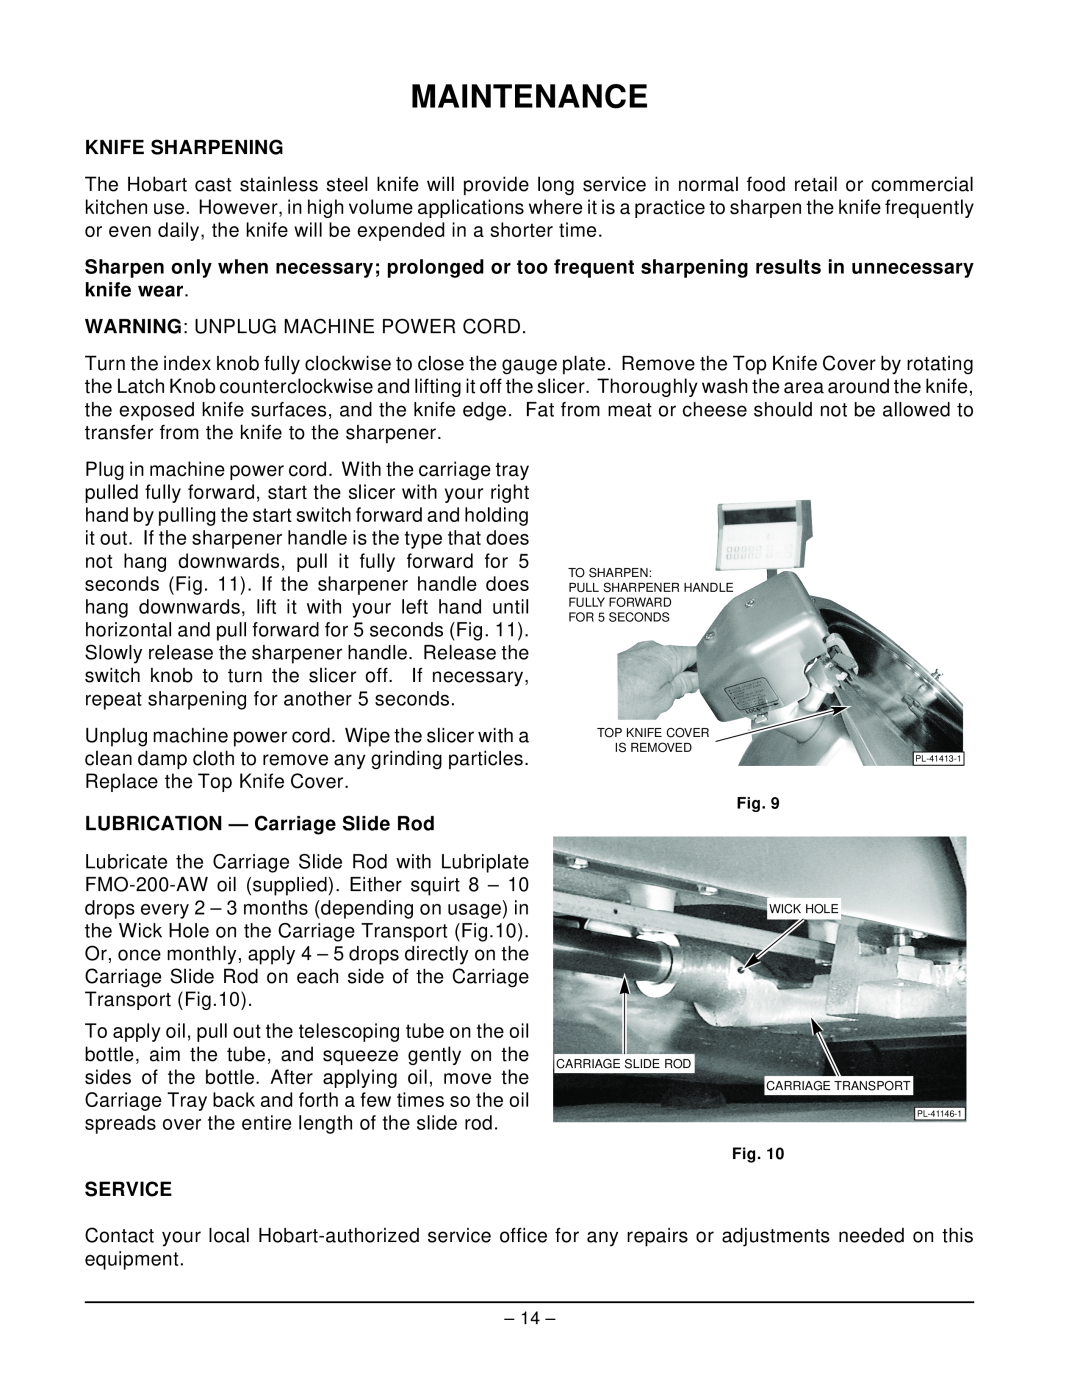 Hobart 2812PS manual Maintenance, Knife Sharpening, LUBRICATION - Carriage Slide Rod, Service 